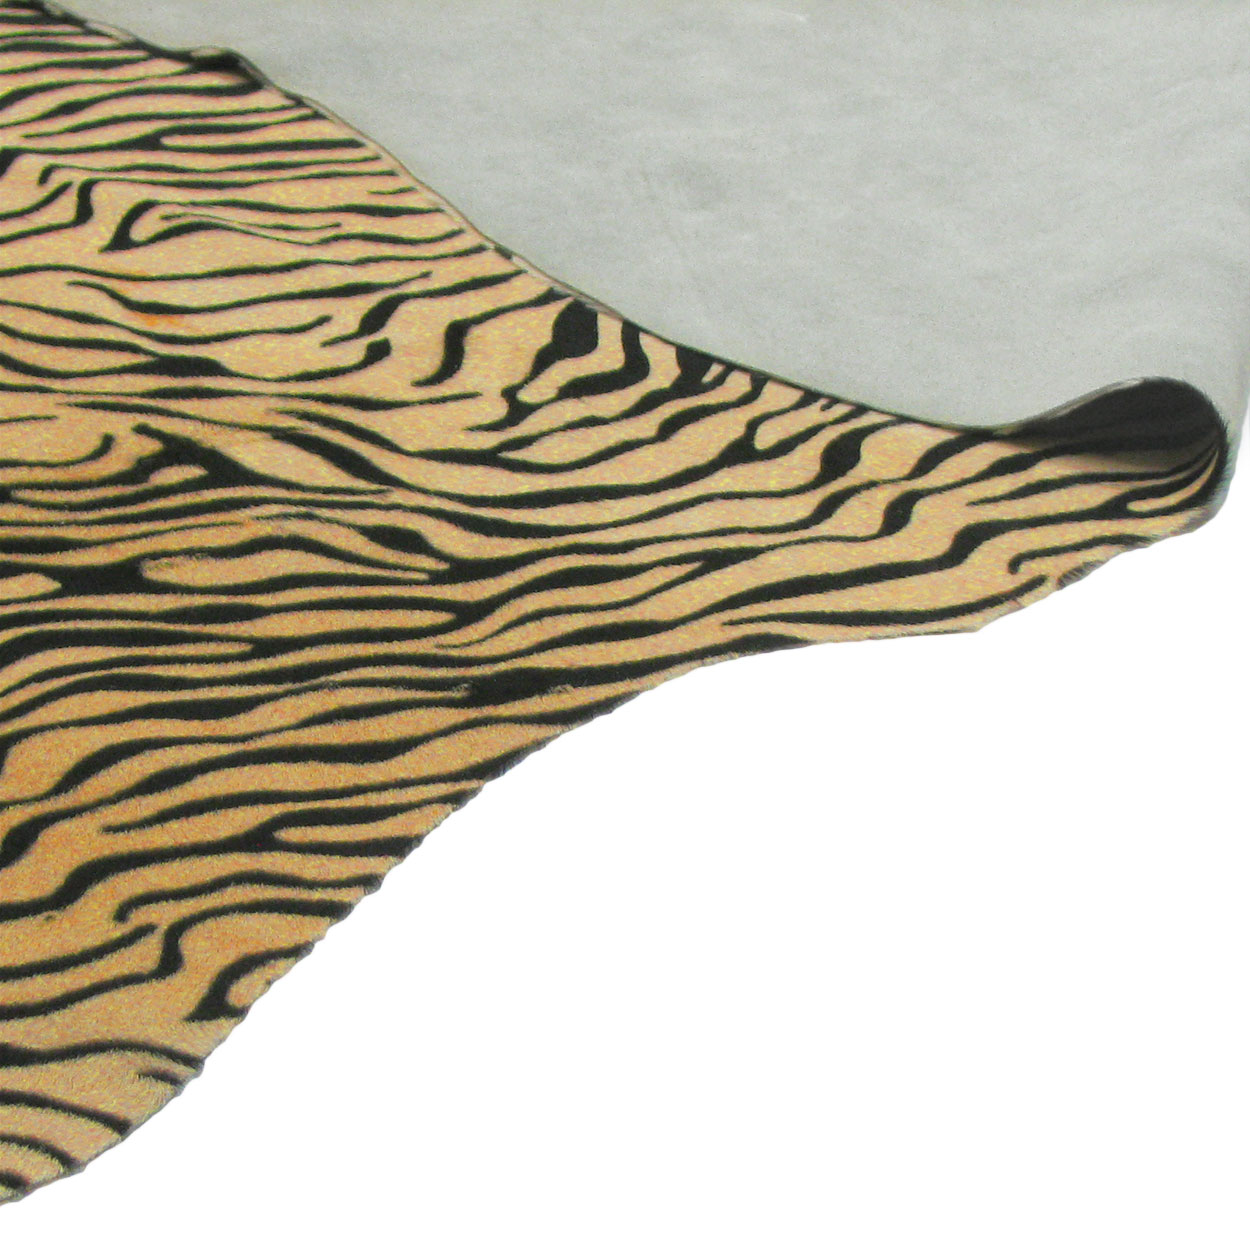 322304 - Safari Stenciled Baby Zebra Print Caramel Premium Cowhide